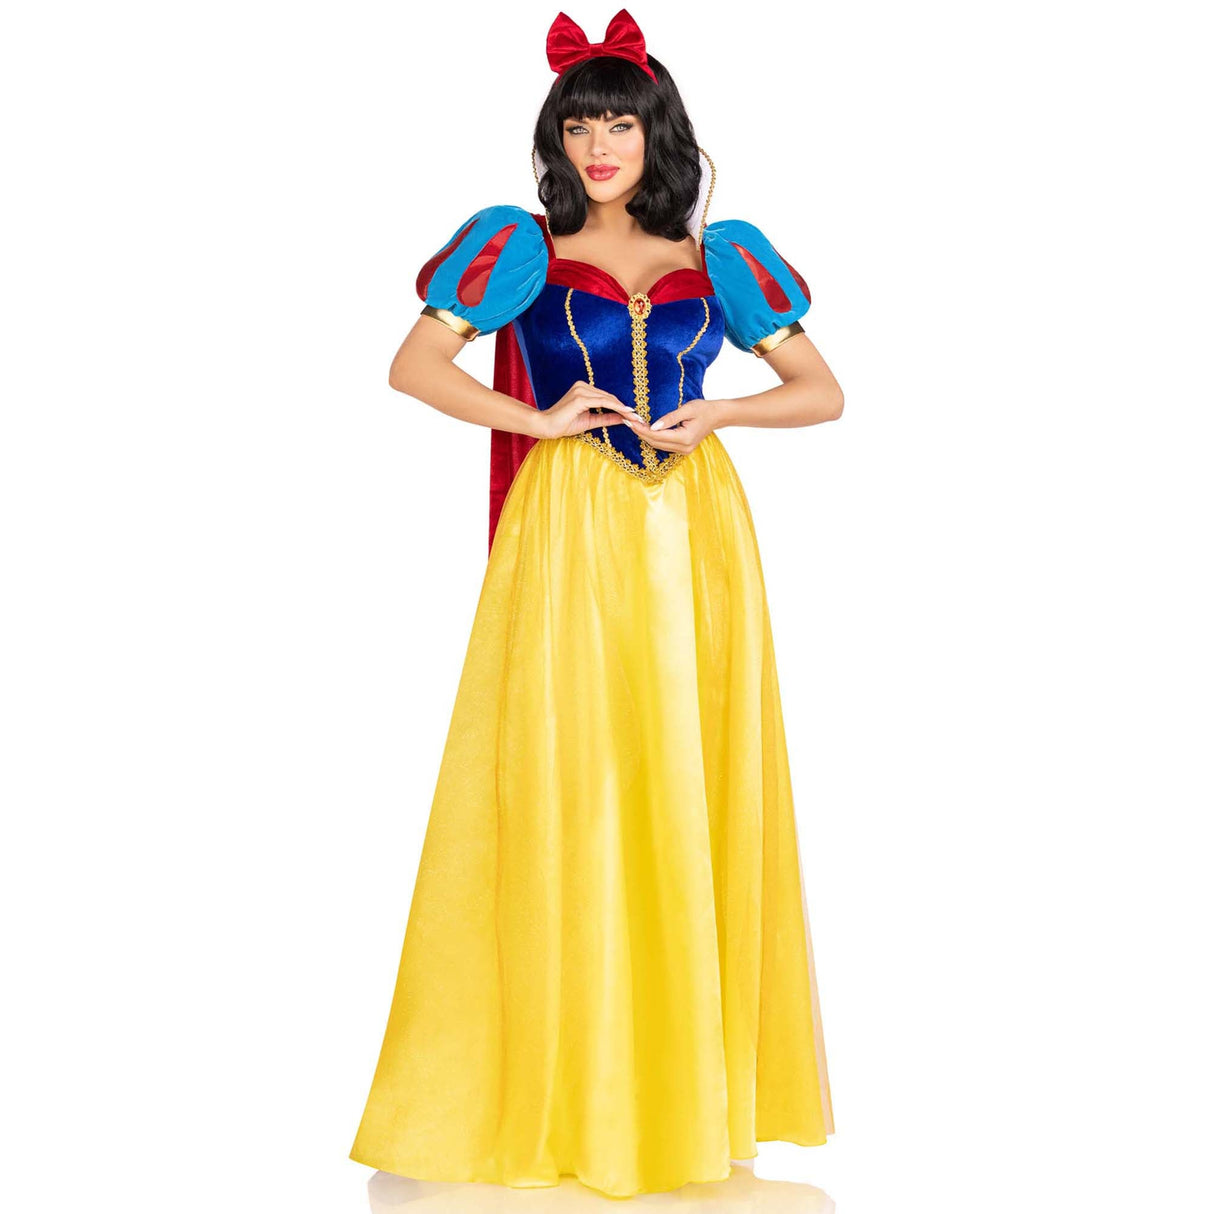 LEG AVENUE/SKU DISTRIBUTORS INC Costumes Royal Snow Princess Costume for Adults